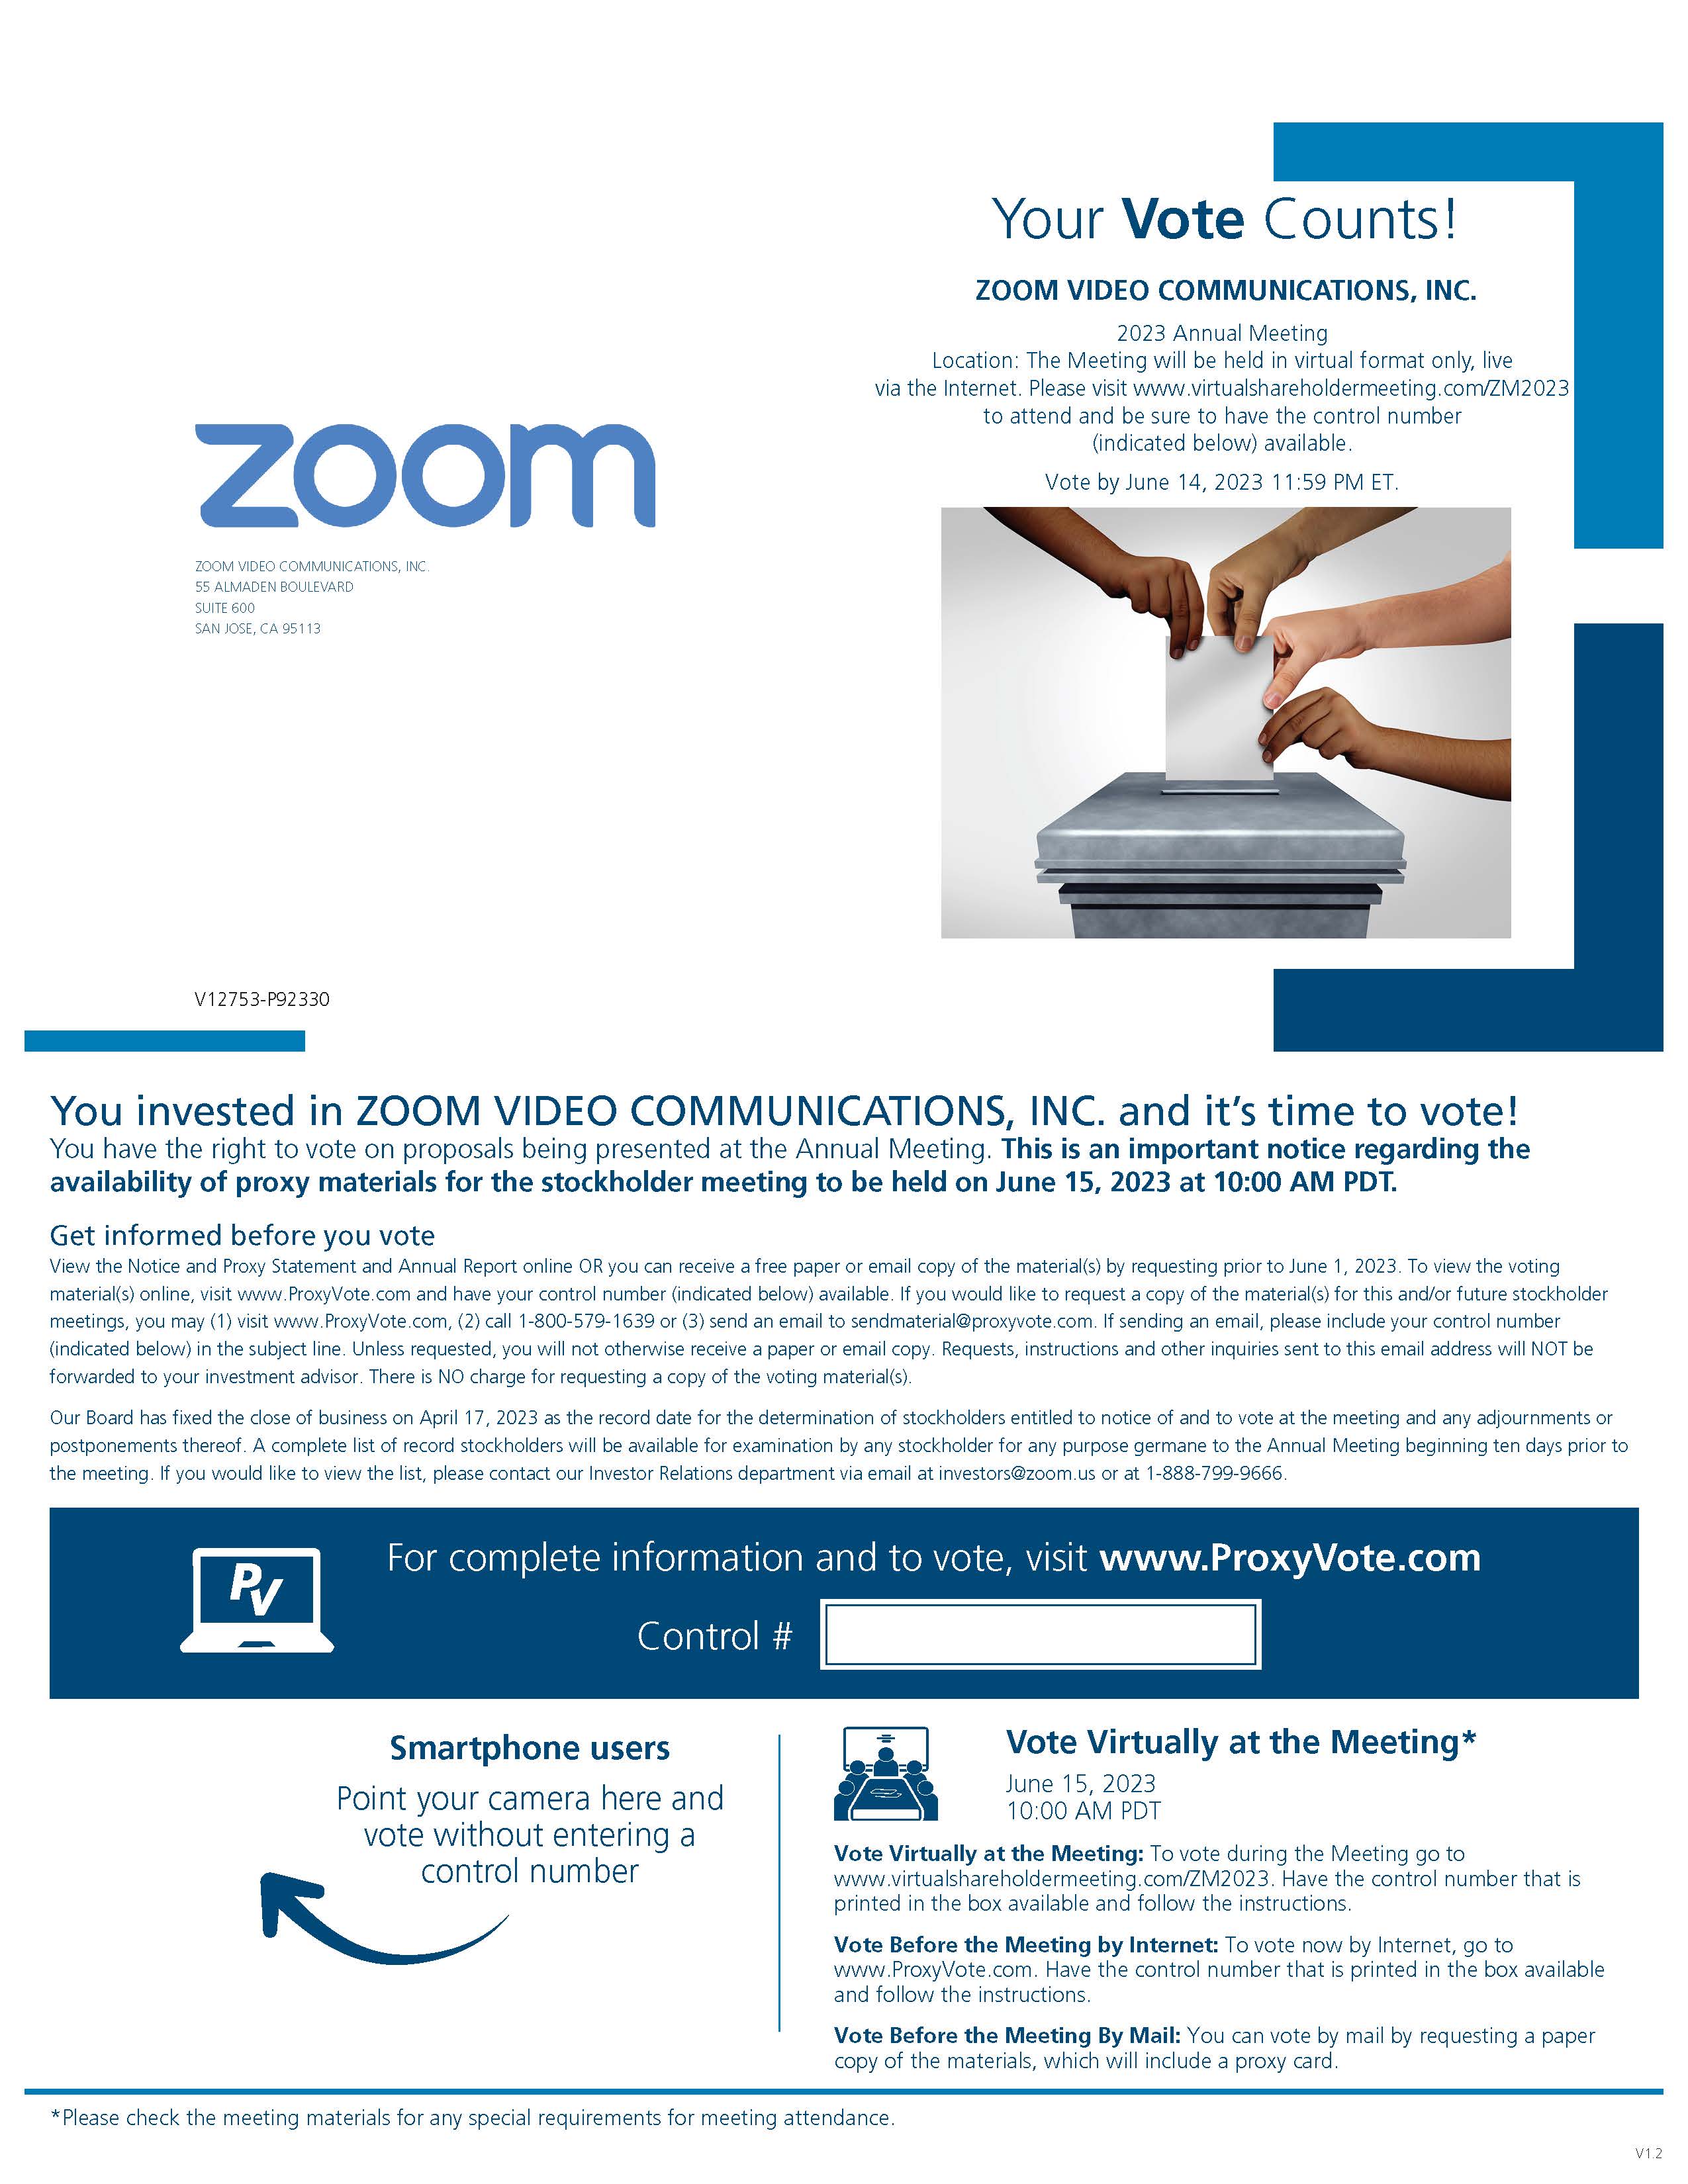 zoomvideocommunicationsincb.jpg